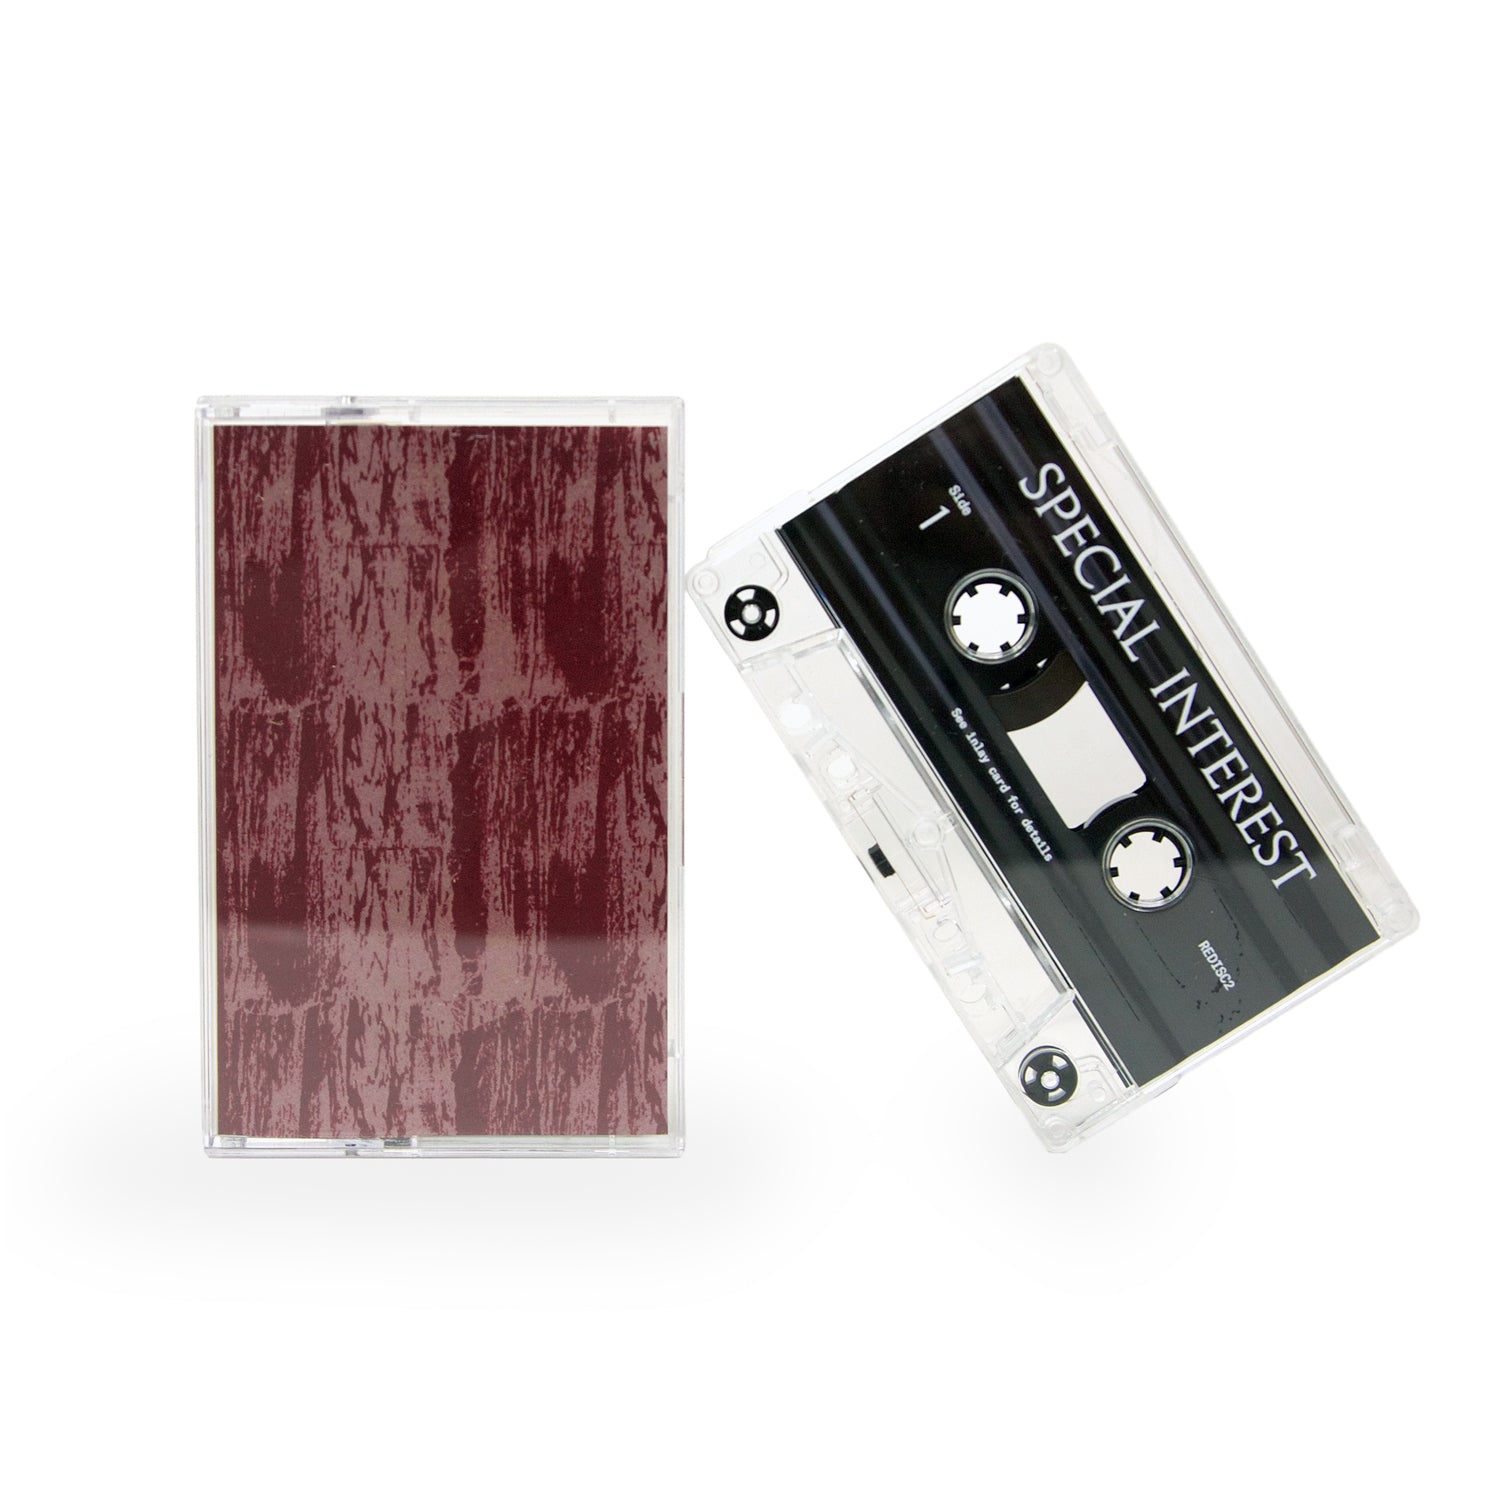 Special-Interest-cassette-main